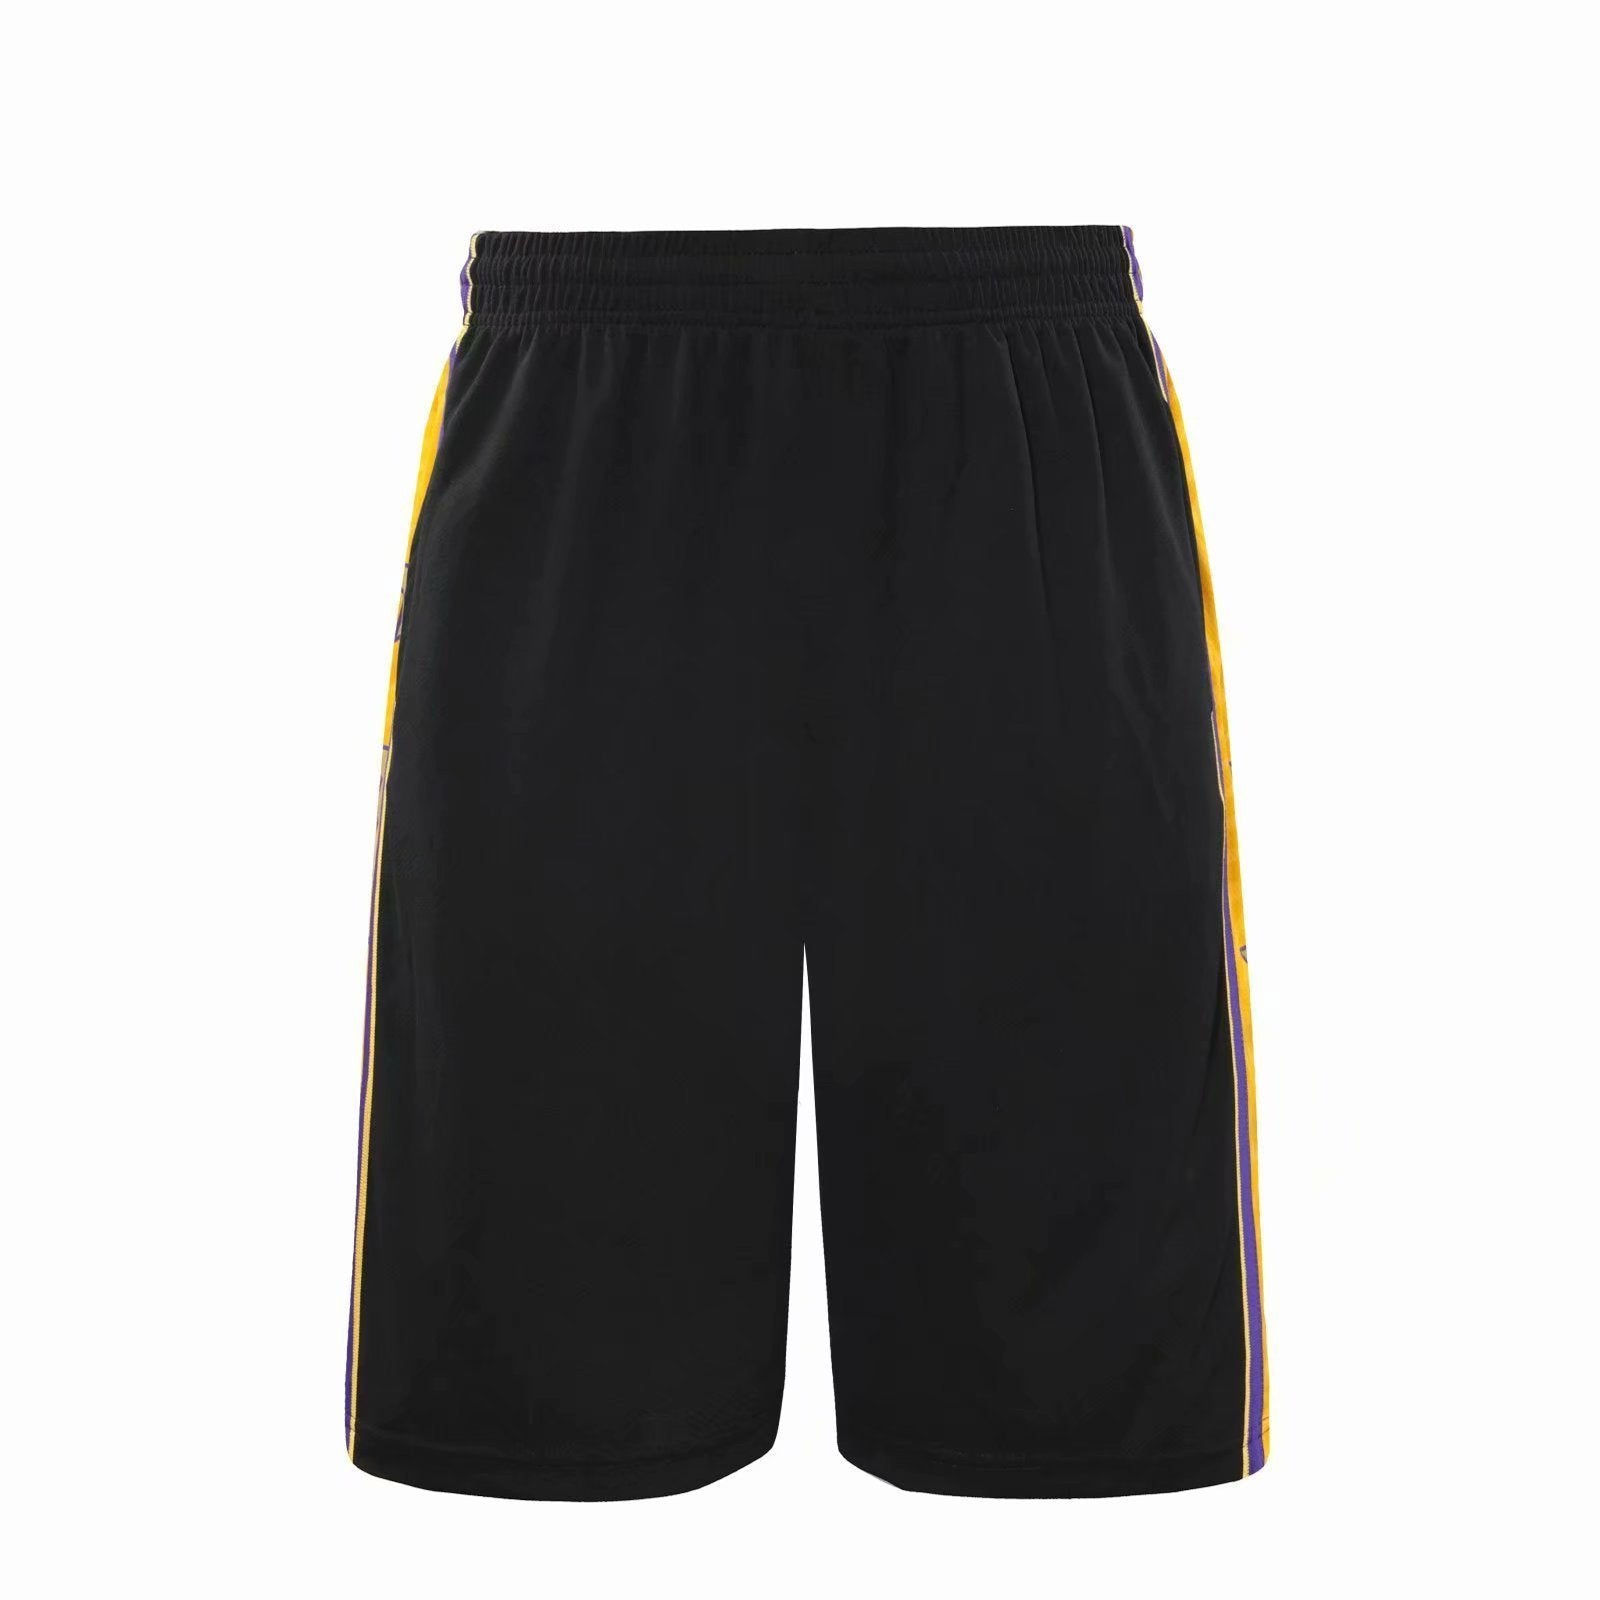 Basketball Shorts AX2P0042 - applecome